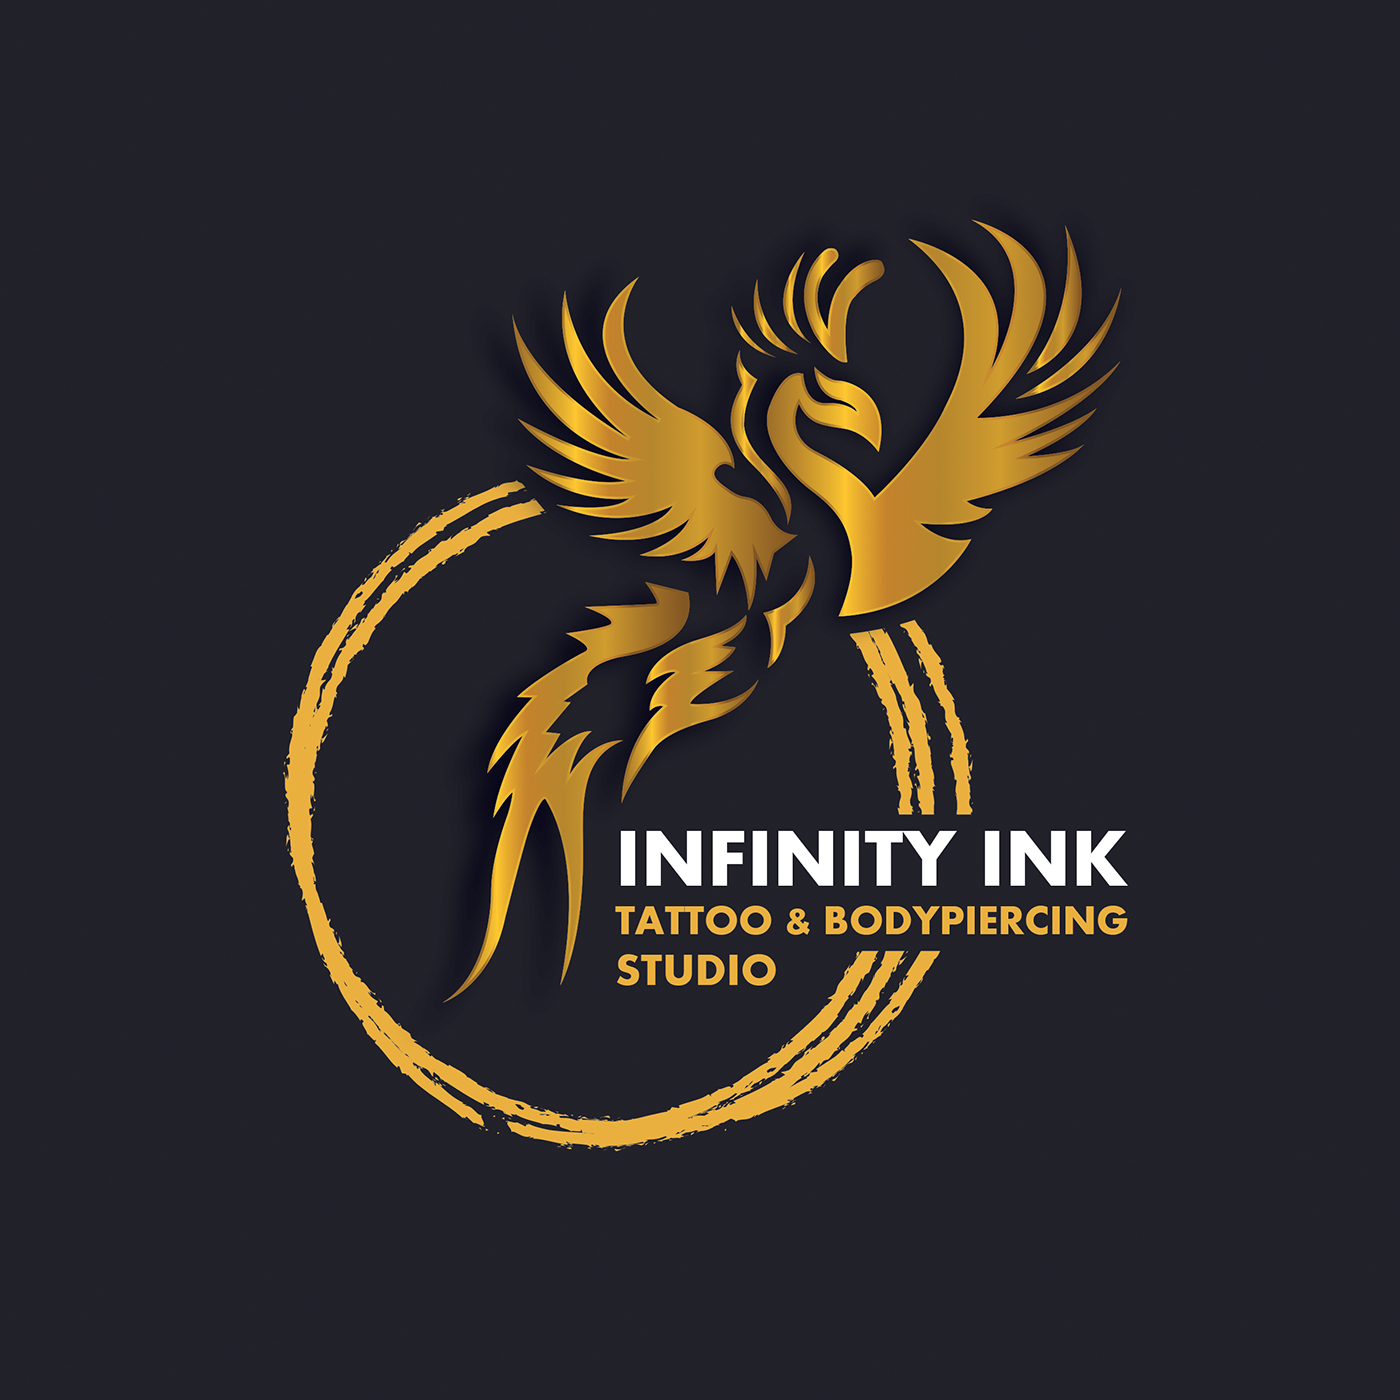 Infinity ink